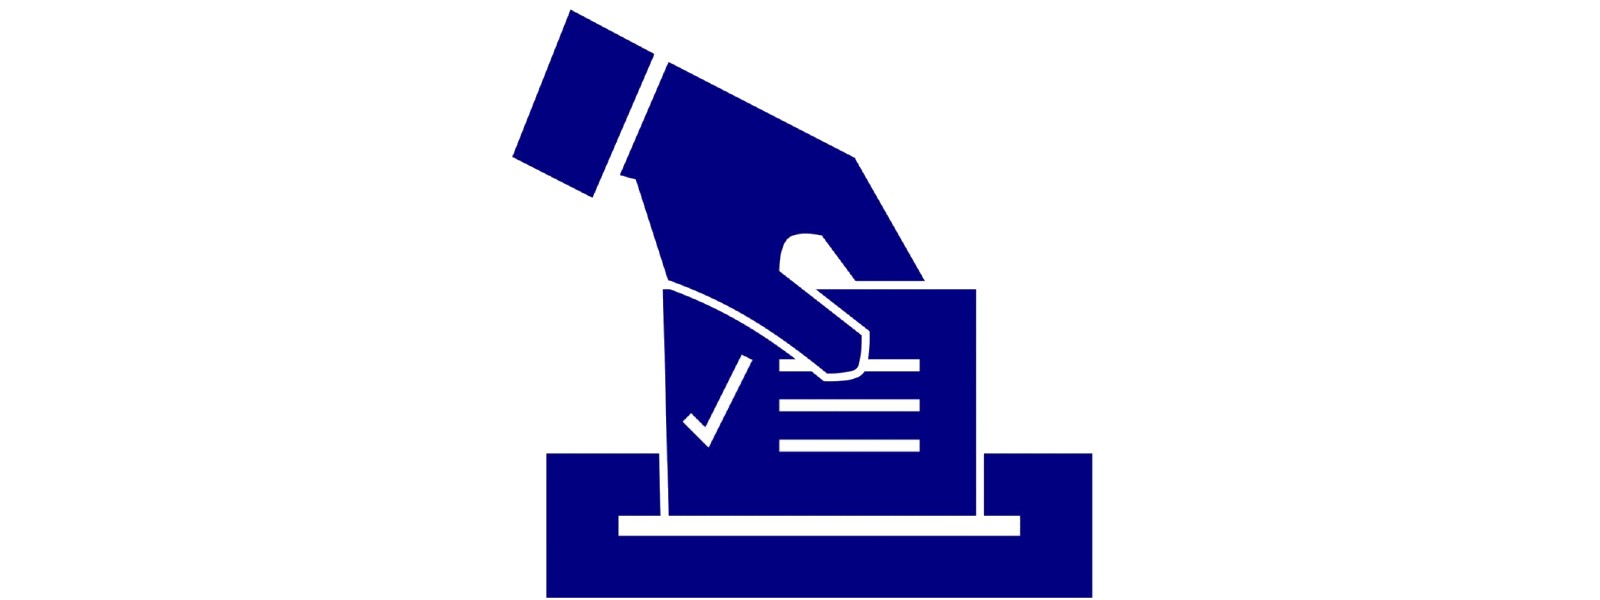 Provincial Council Elections via Old System, concludes PSC